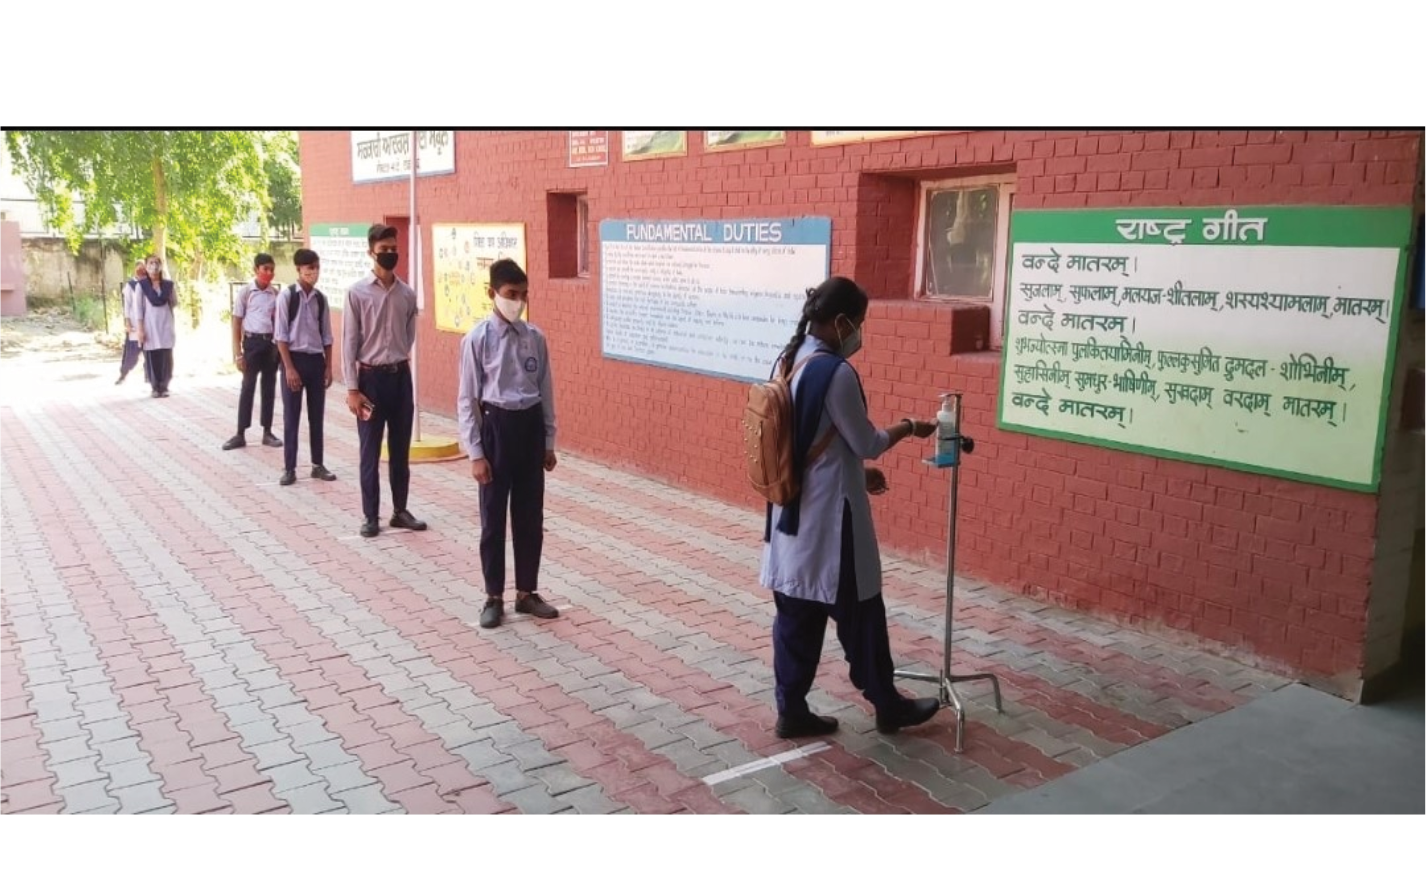 Students sanitizing hands